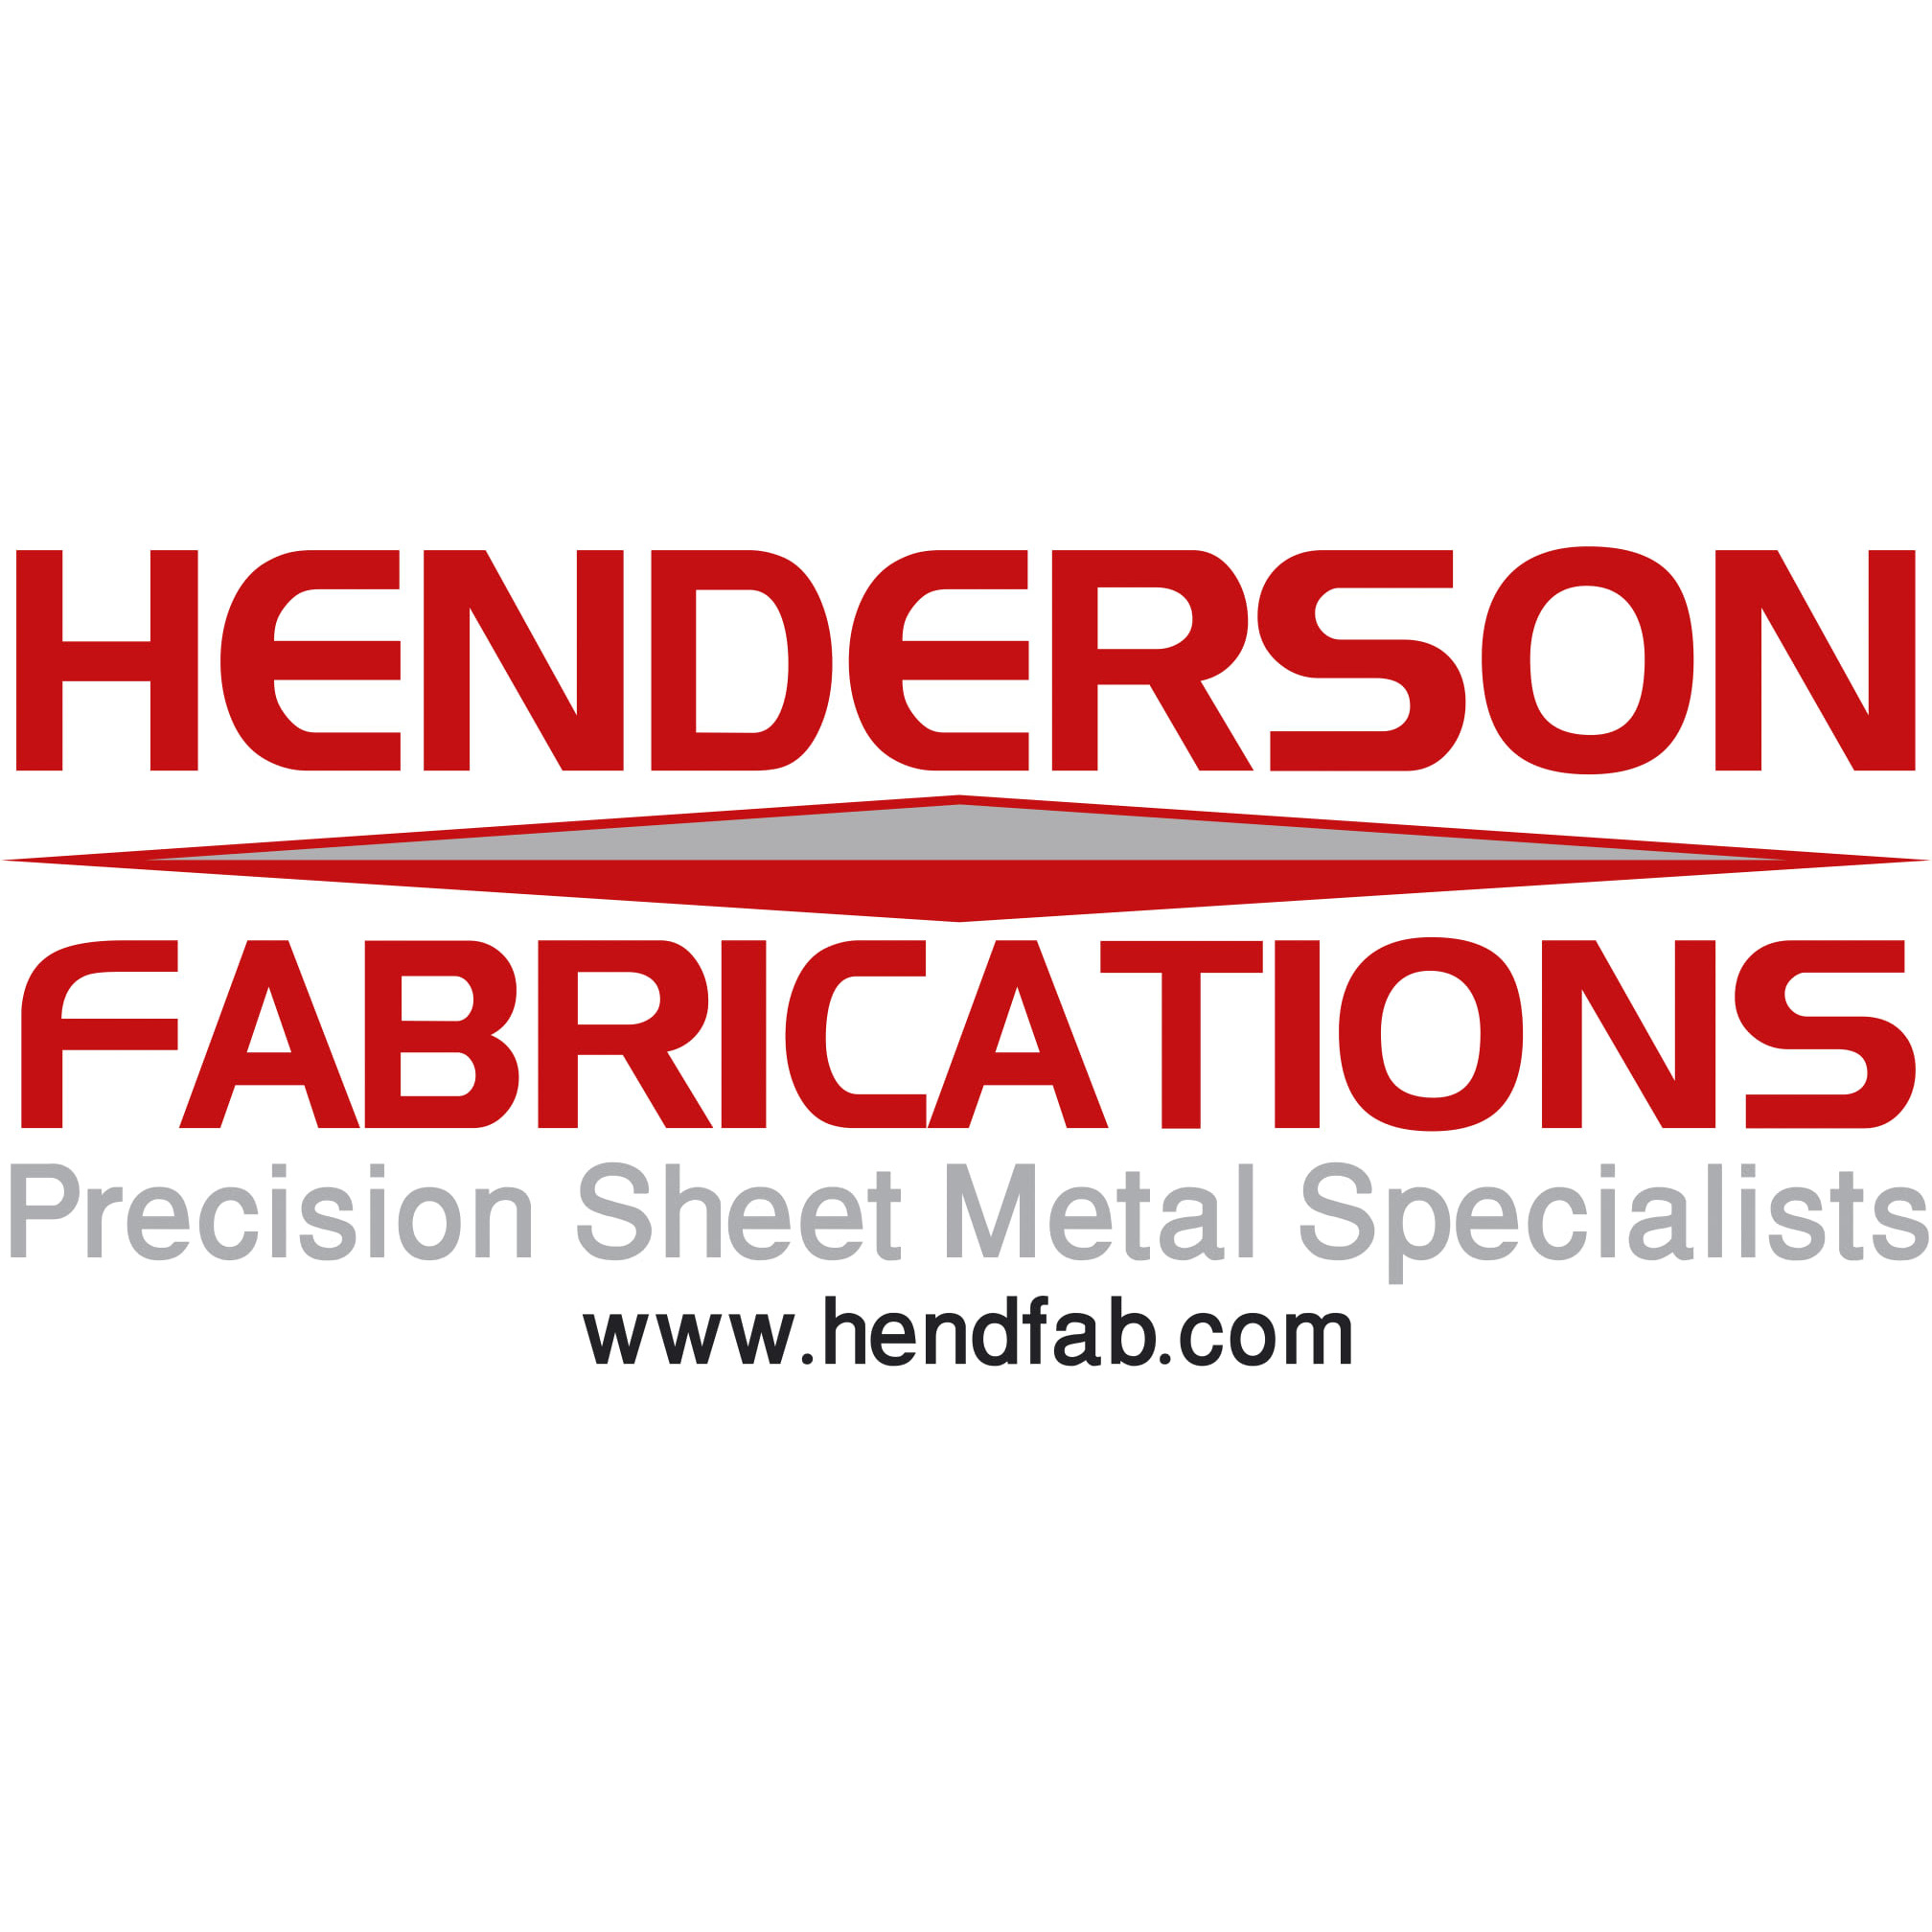 Henderson Farbrications Logo